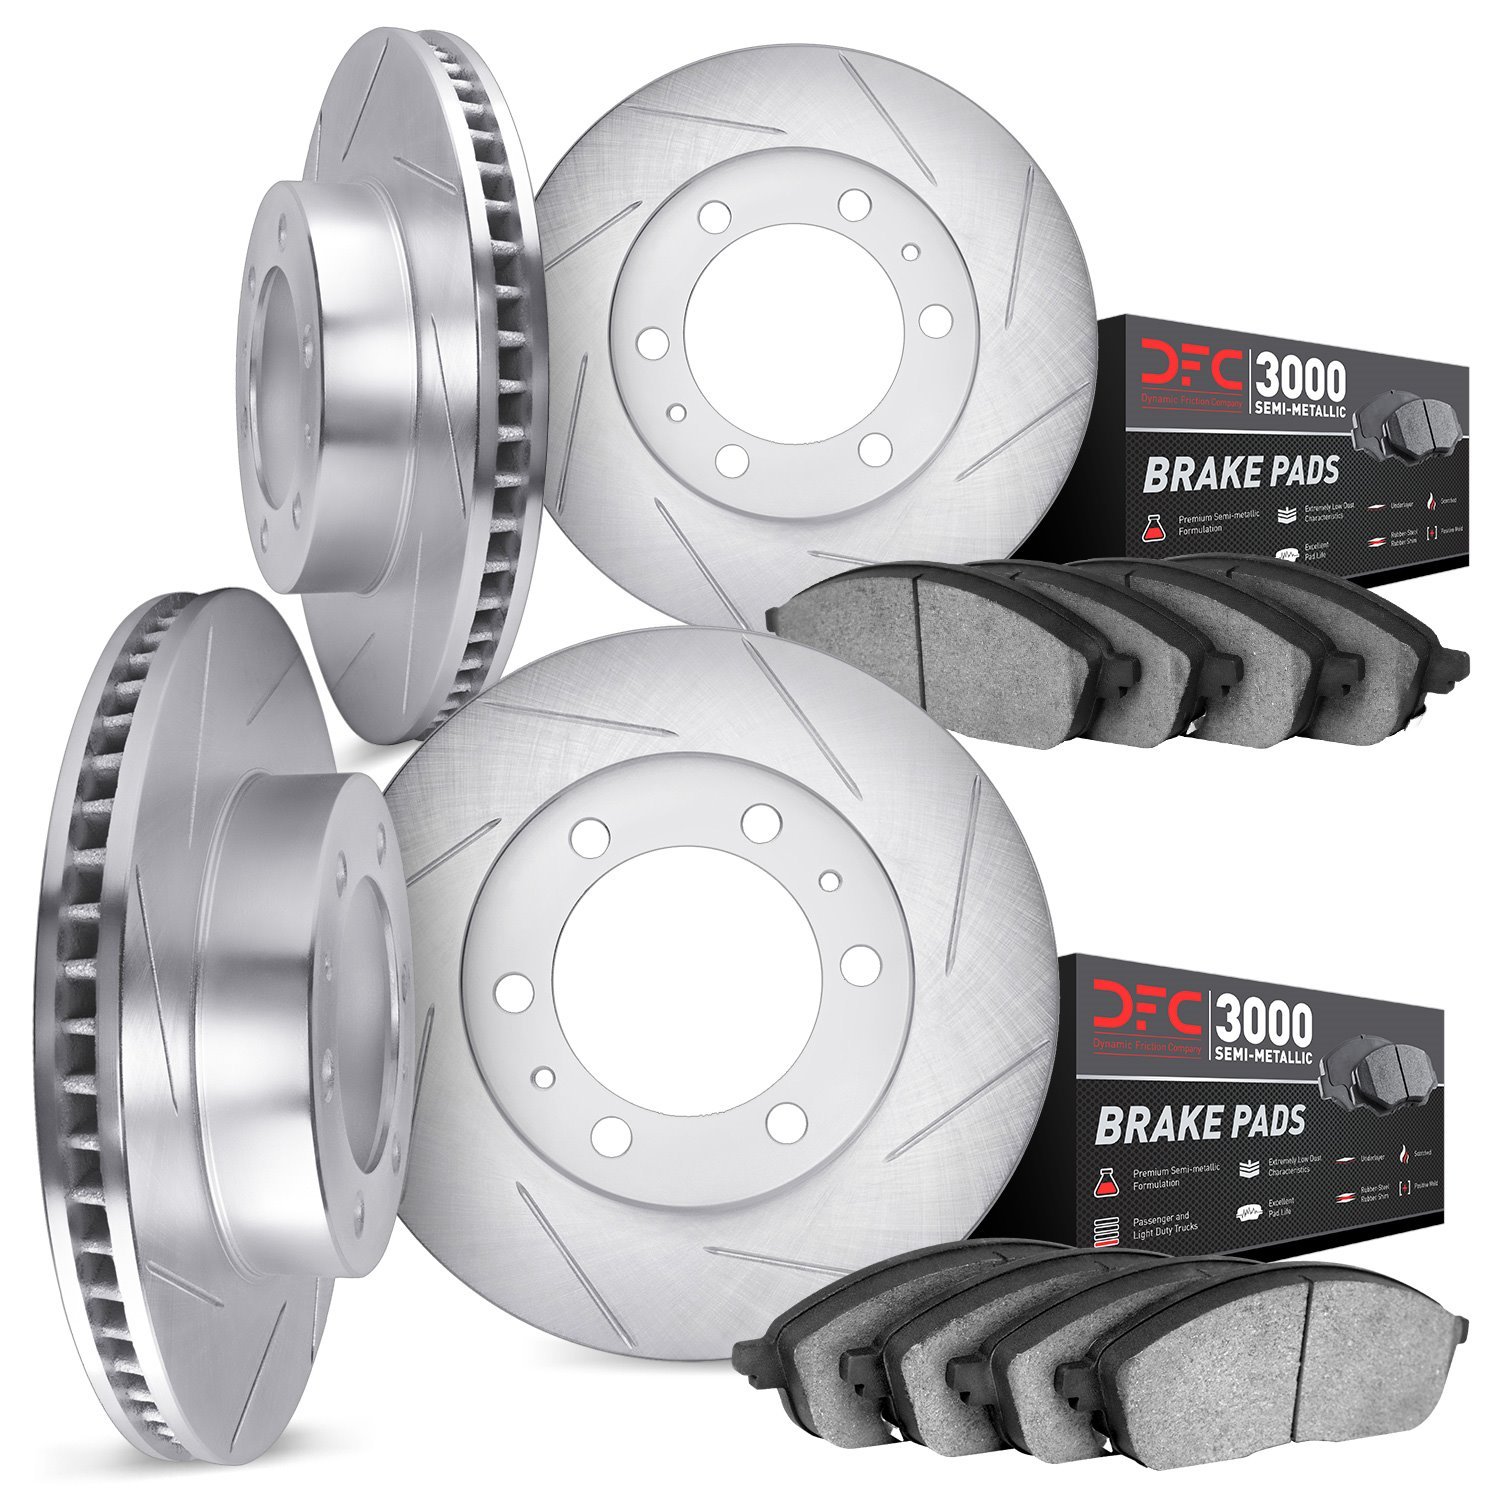 5114-54108 Slotted Brake Rotors with 3000-Series Semi-Metallic Brake Pads Kit & Hardware [Silver], 2012-2020 Ford/Lincoln/Mercur